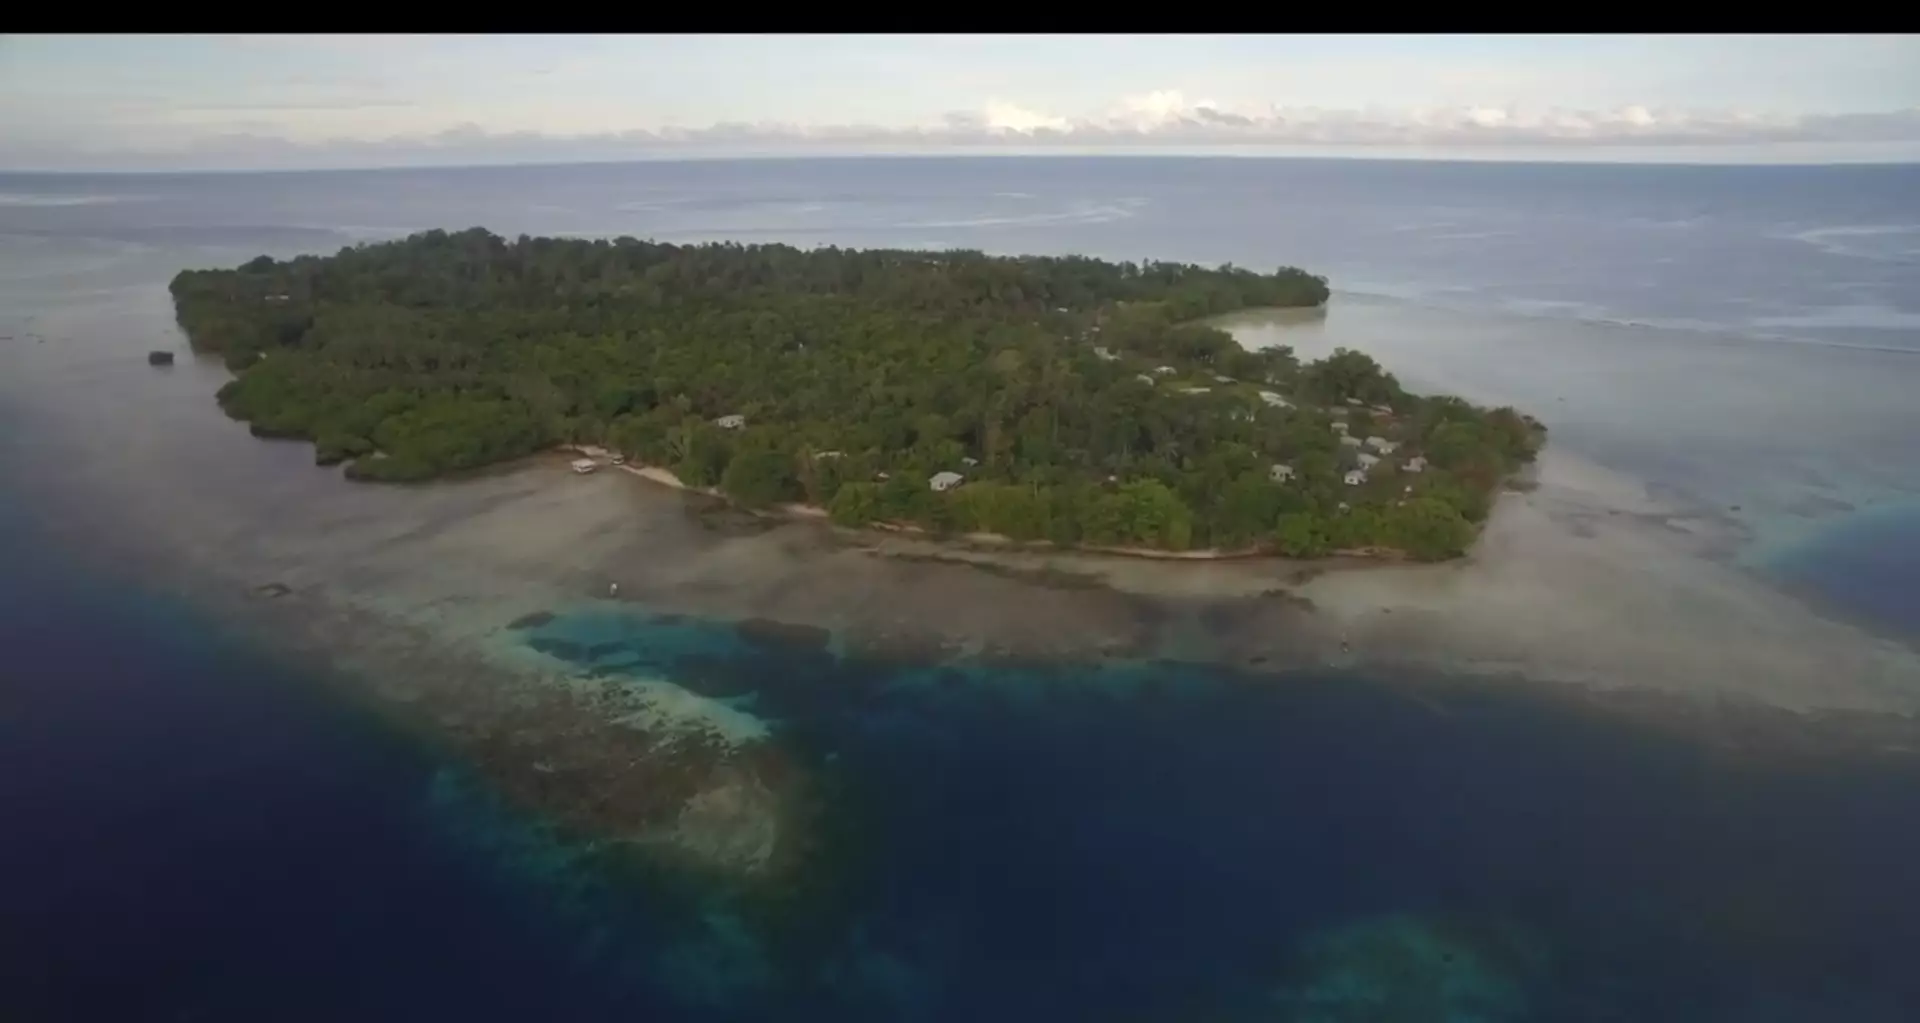 Wreckage found near Buka Island, Papua New Guinea, could be Earhart's plane.